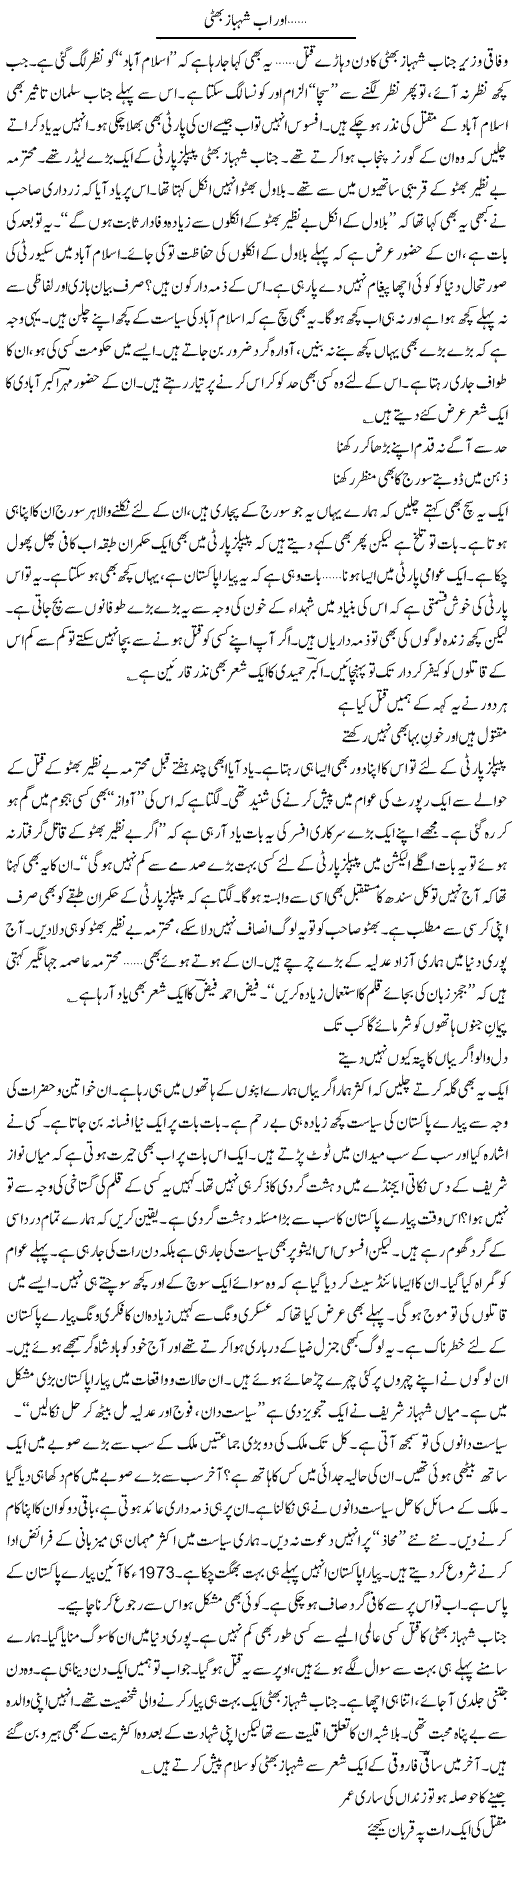 Shahbaz Bhatti Express Column Ijaz Hafeez 16 March 2011